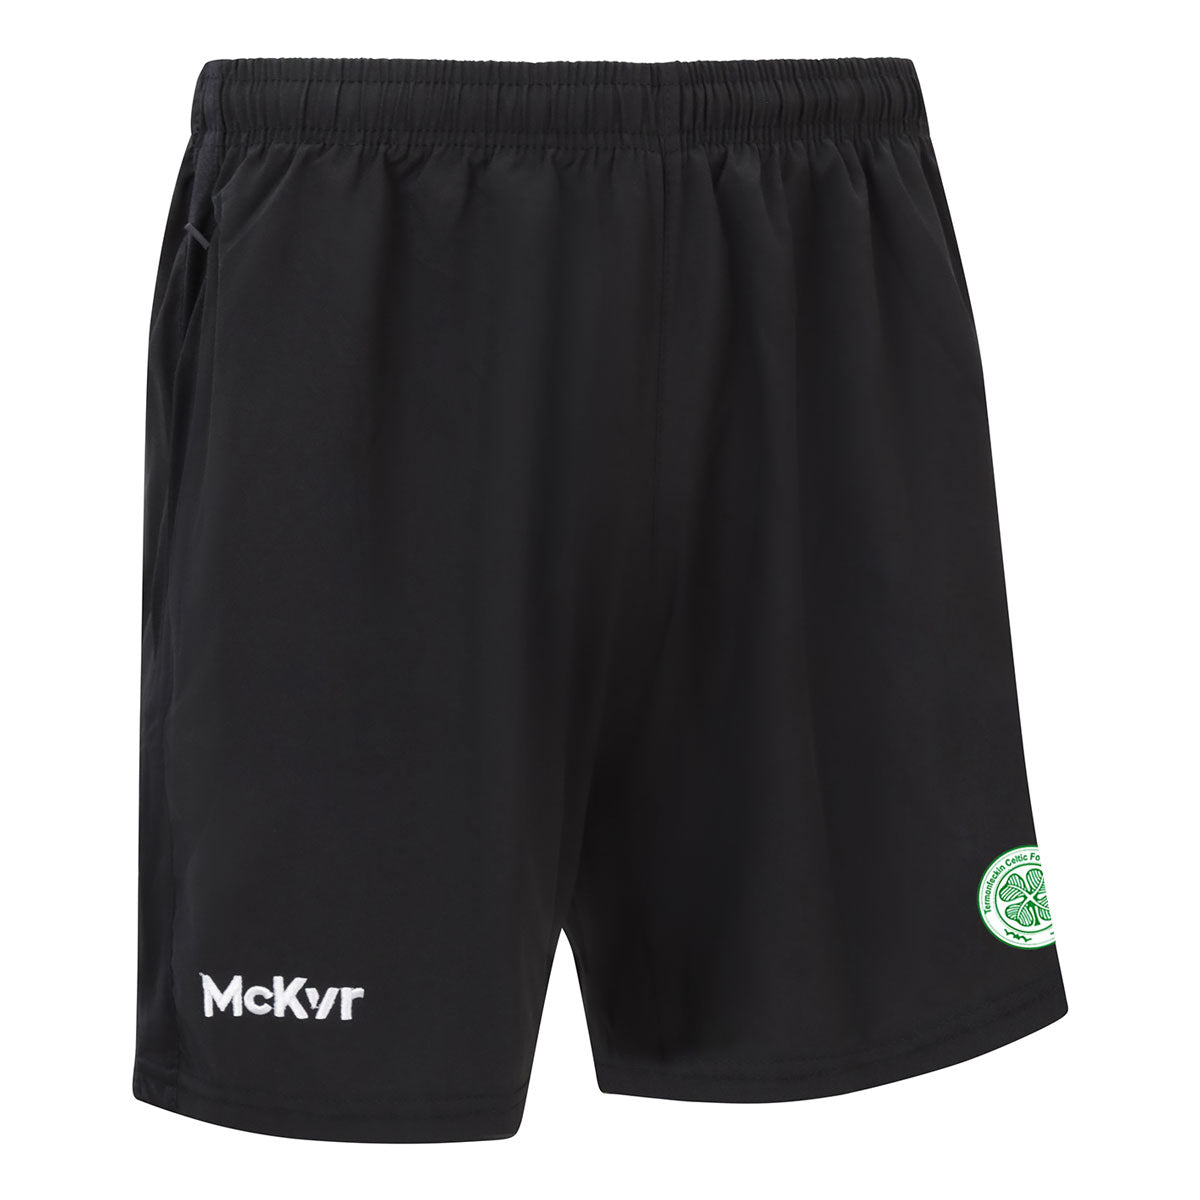 Mc Keever Termonfeckin Celtic FC Core 22 Leisure Shorts - Adult - Black